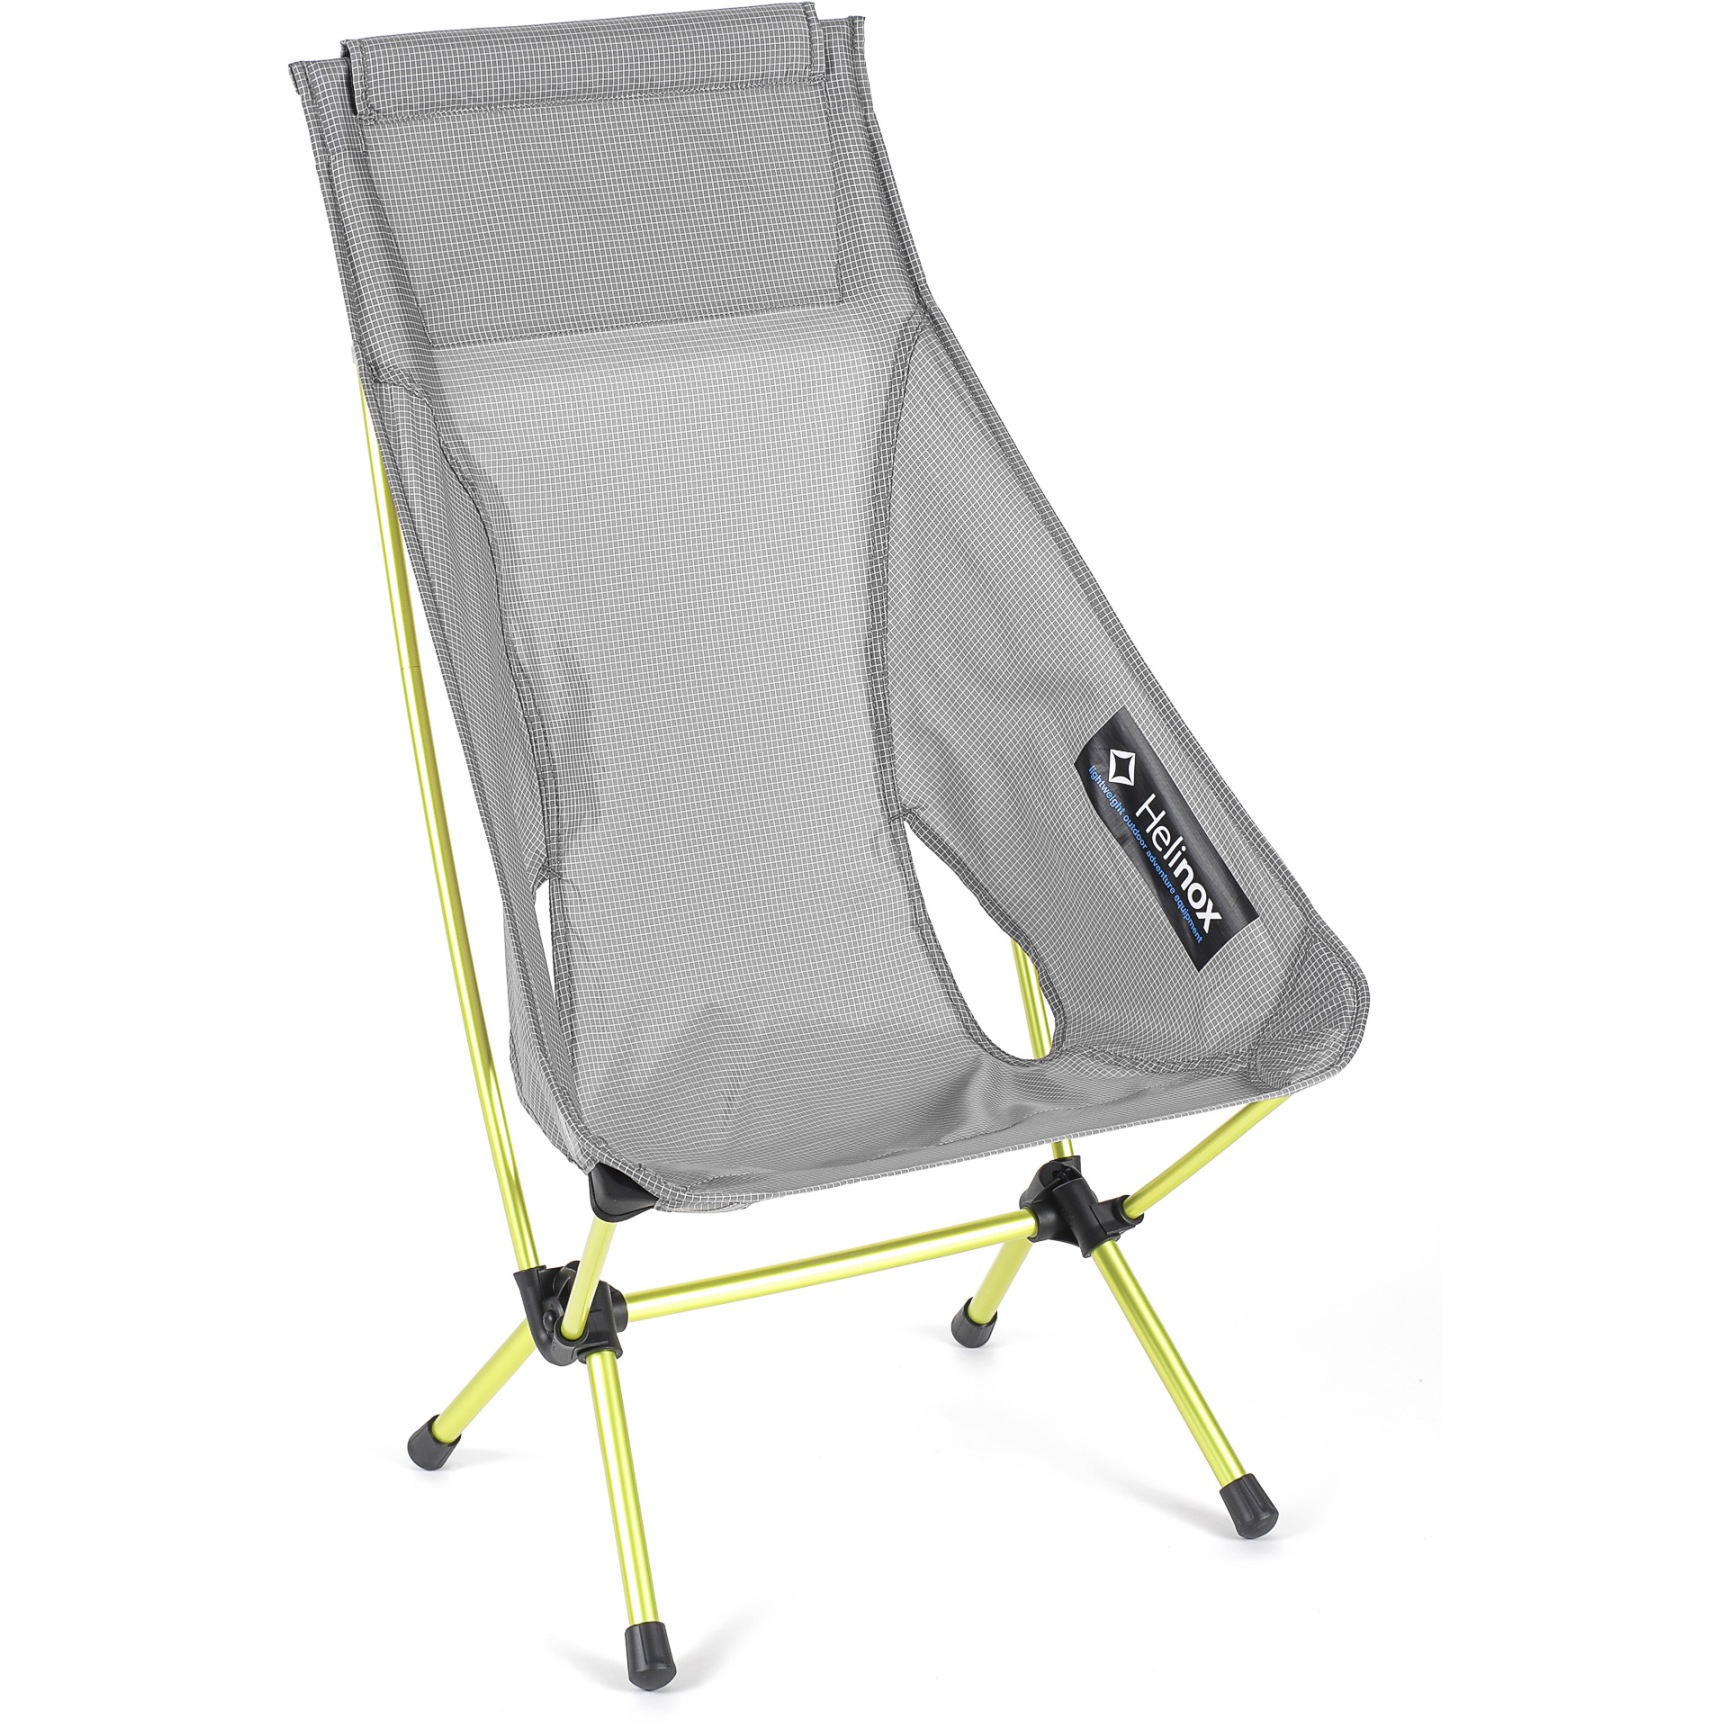 Productfoto van Helinox Chair Zero High Back Camping Chair - grey - melon